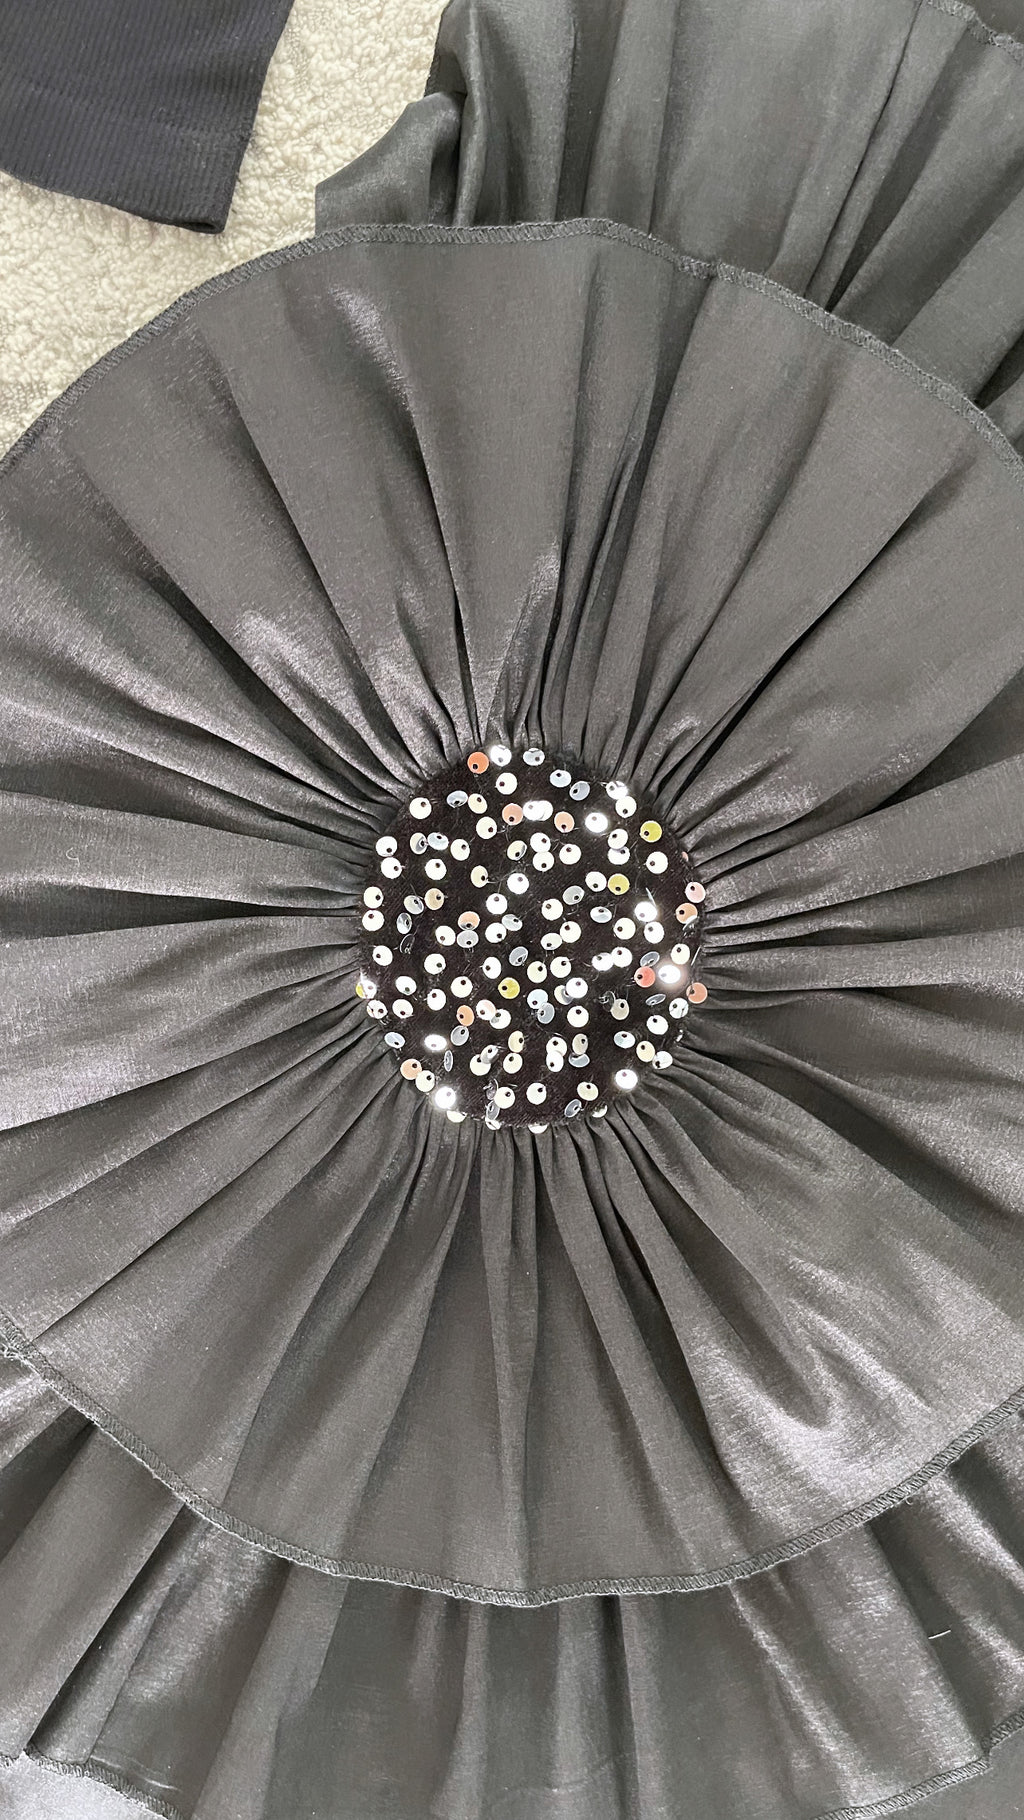 Bloomed pencil skirt